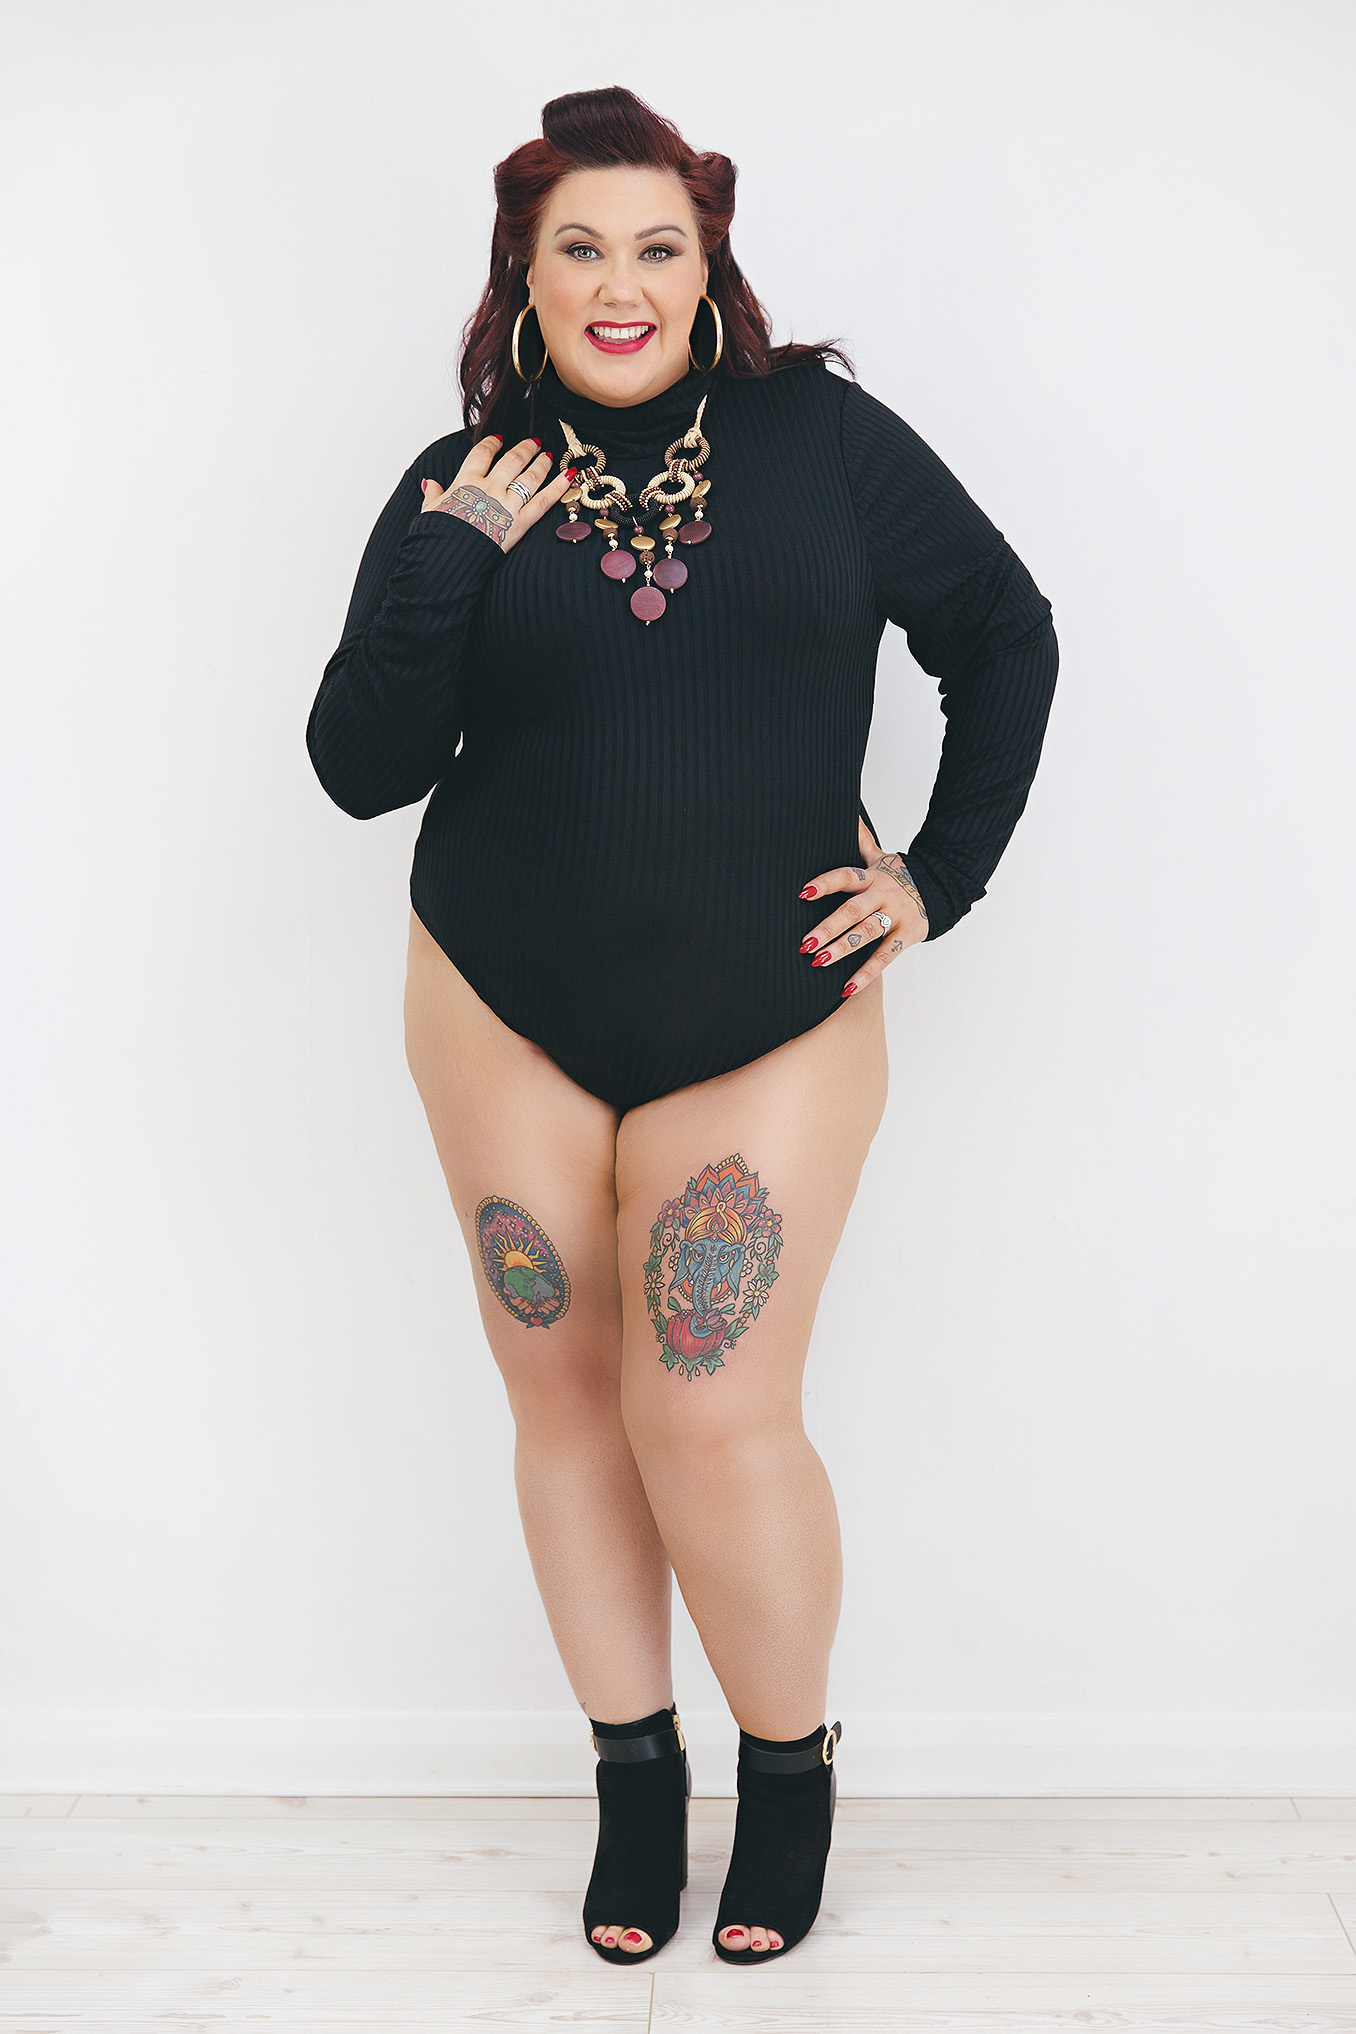 Dani Wallace, The Queen Bee, The Metro, body celebration boudoir shoot